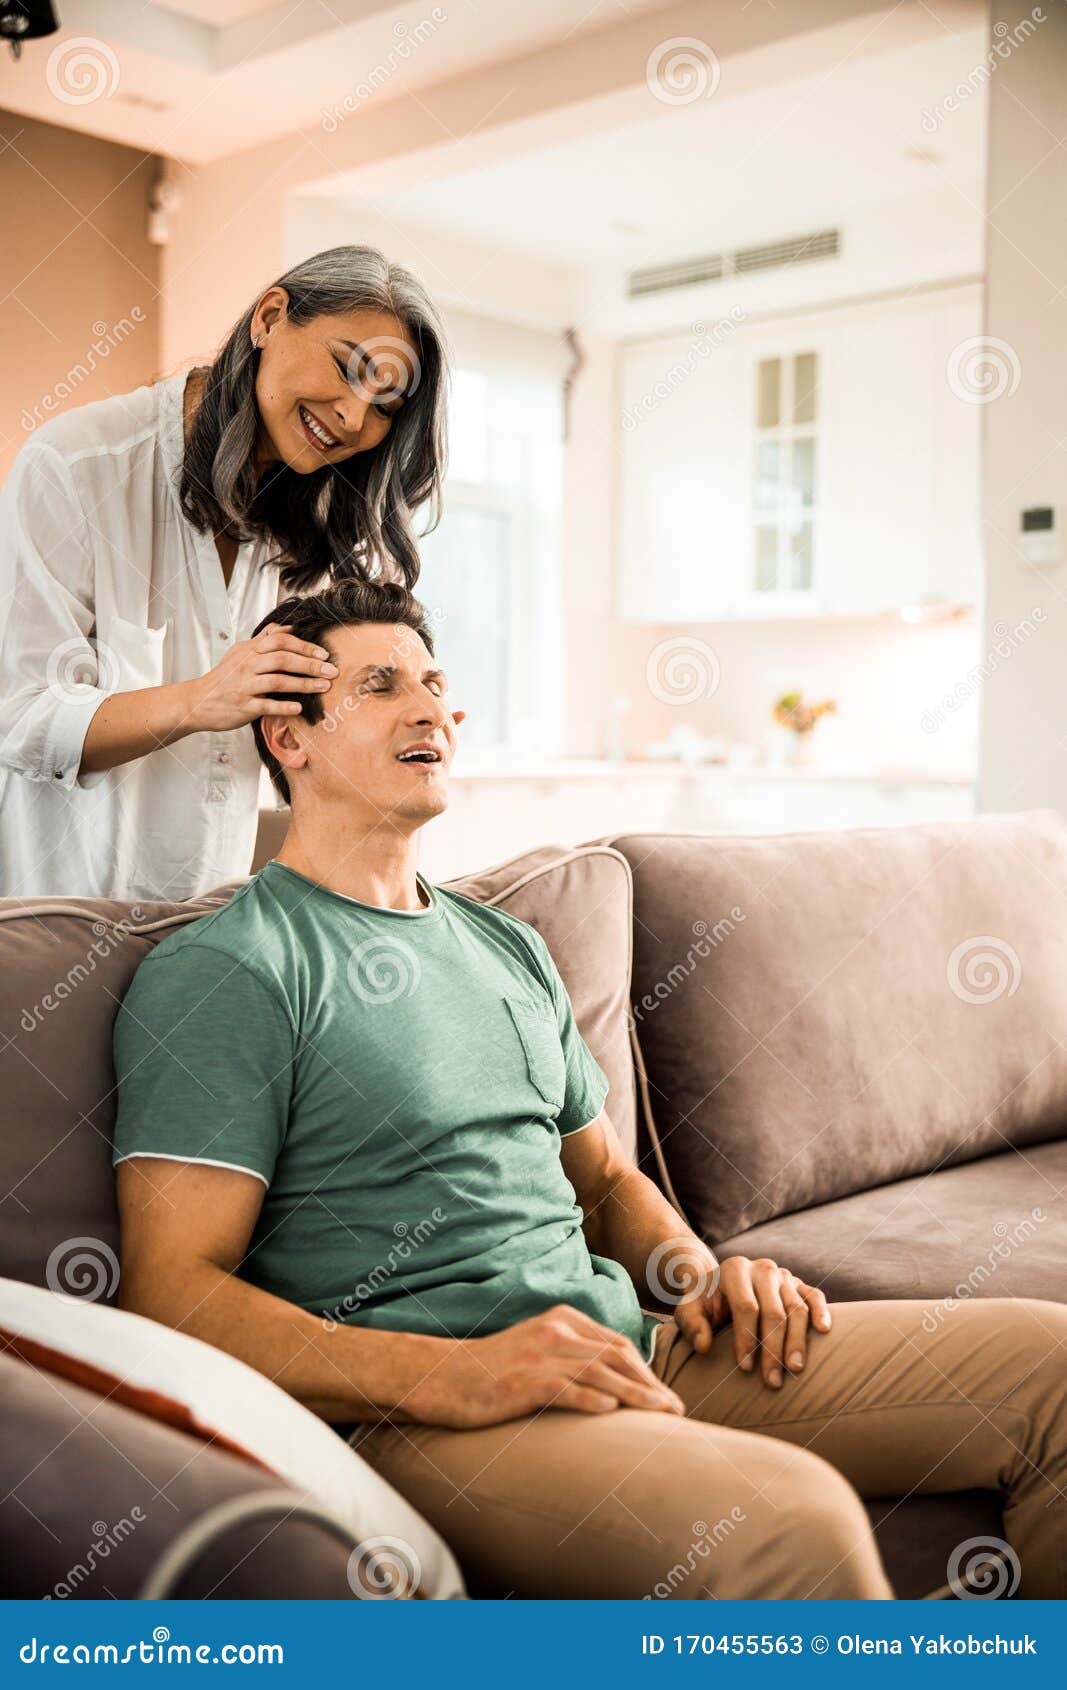 alex habegger add photo husband watches wife get a massage